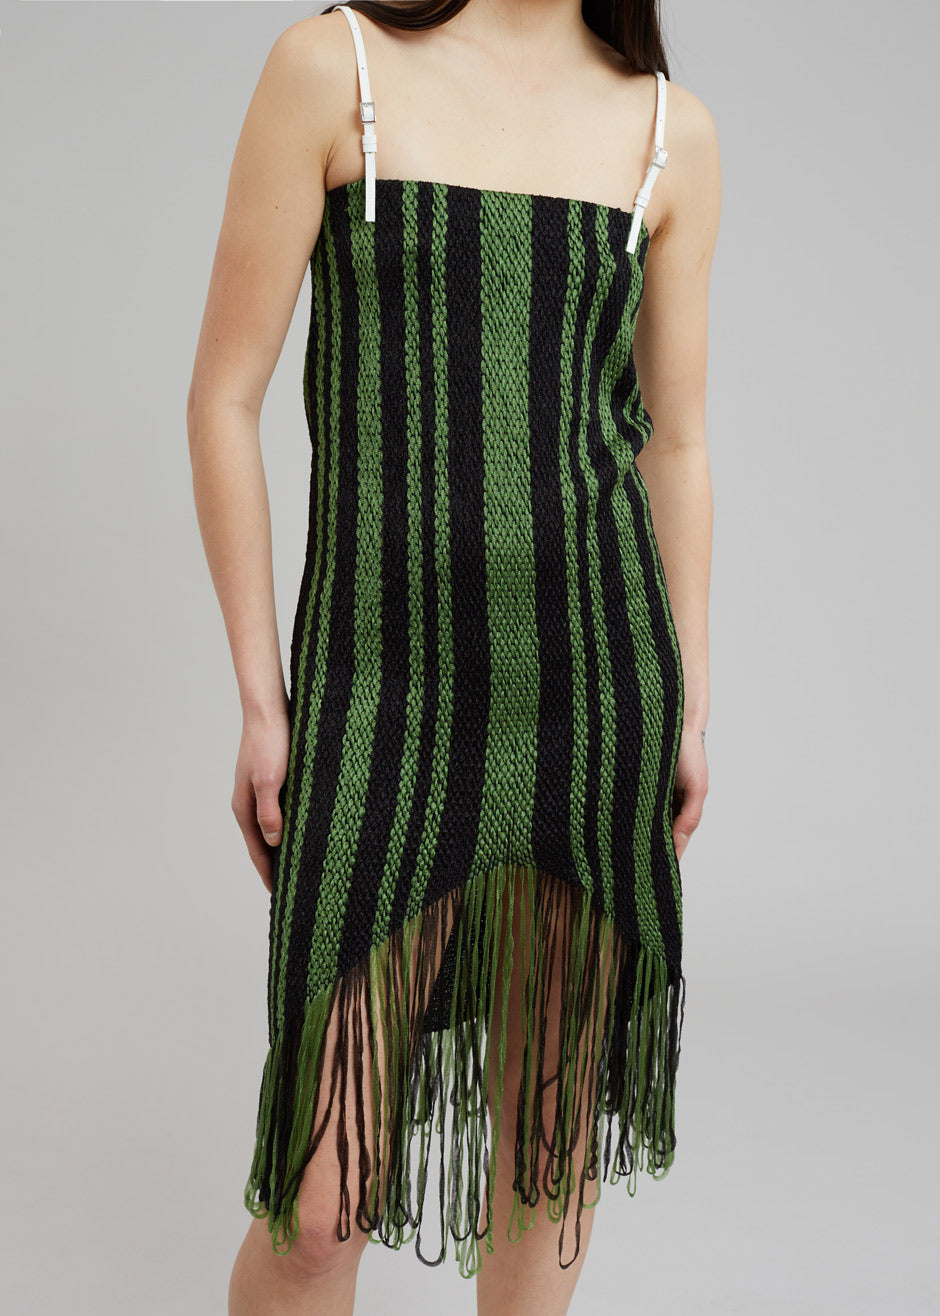 JW Anderson Fringe Detail Camisole Dress - Green/Black – The